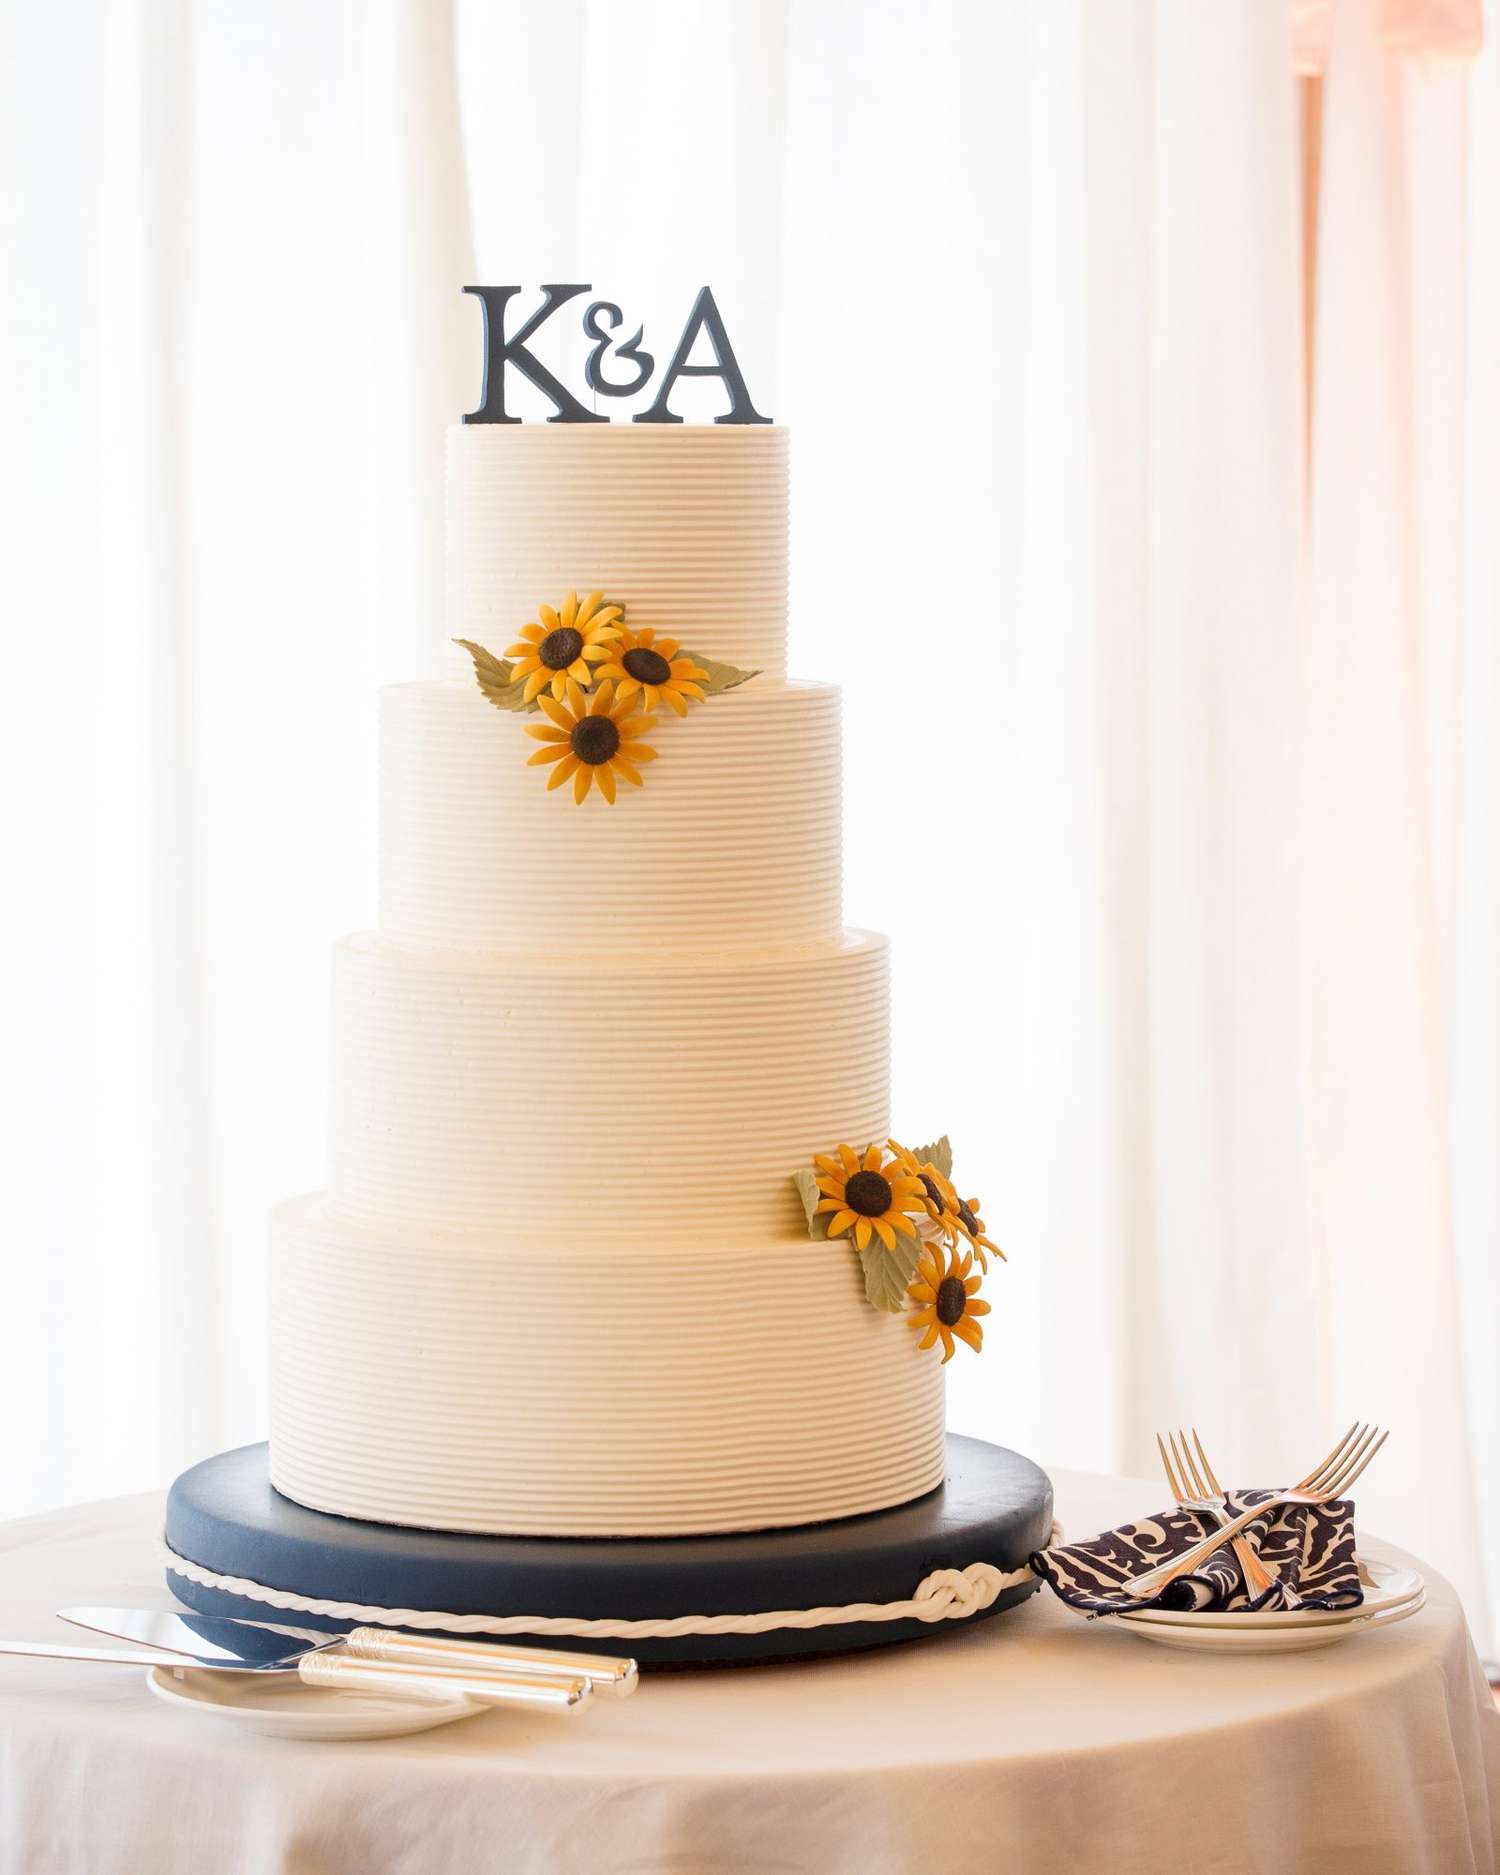 kristel-austin-wedding-cake-34-s11860-0415.jpg